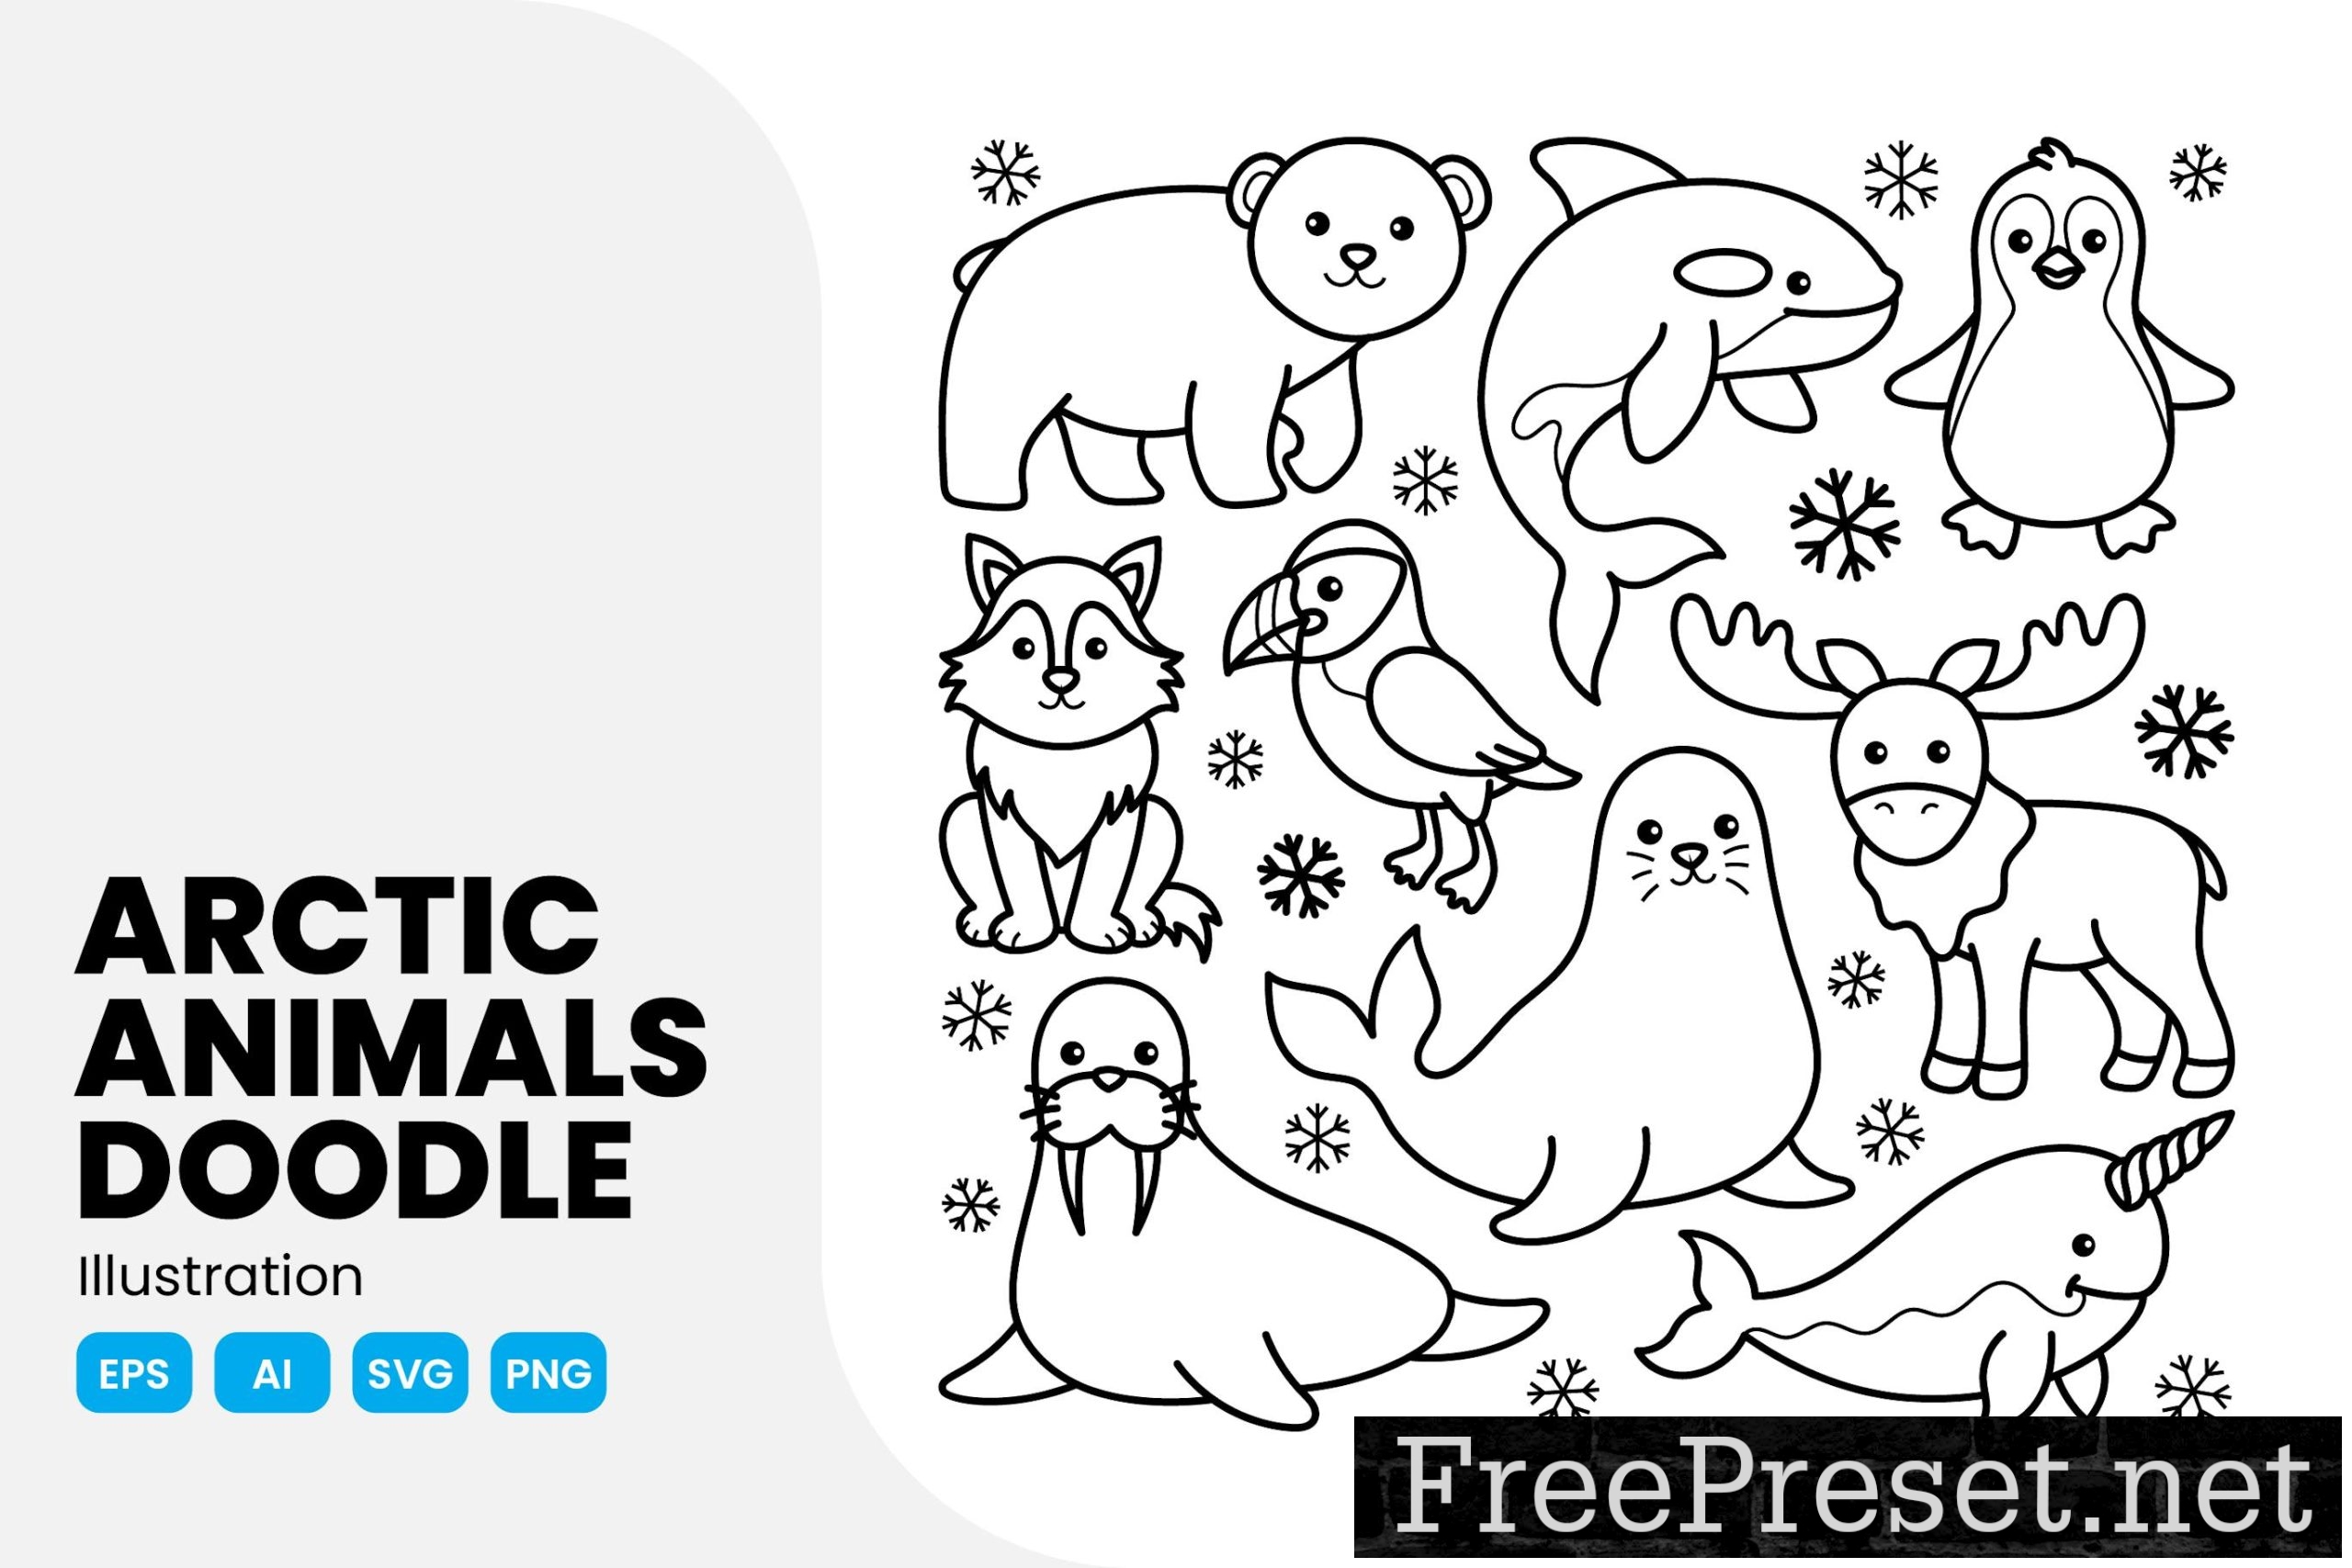 Arctic Animals Doodle Illustration 8LGFJCW